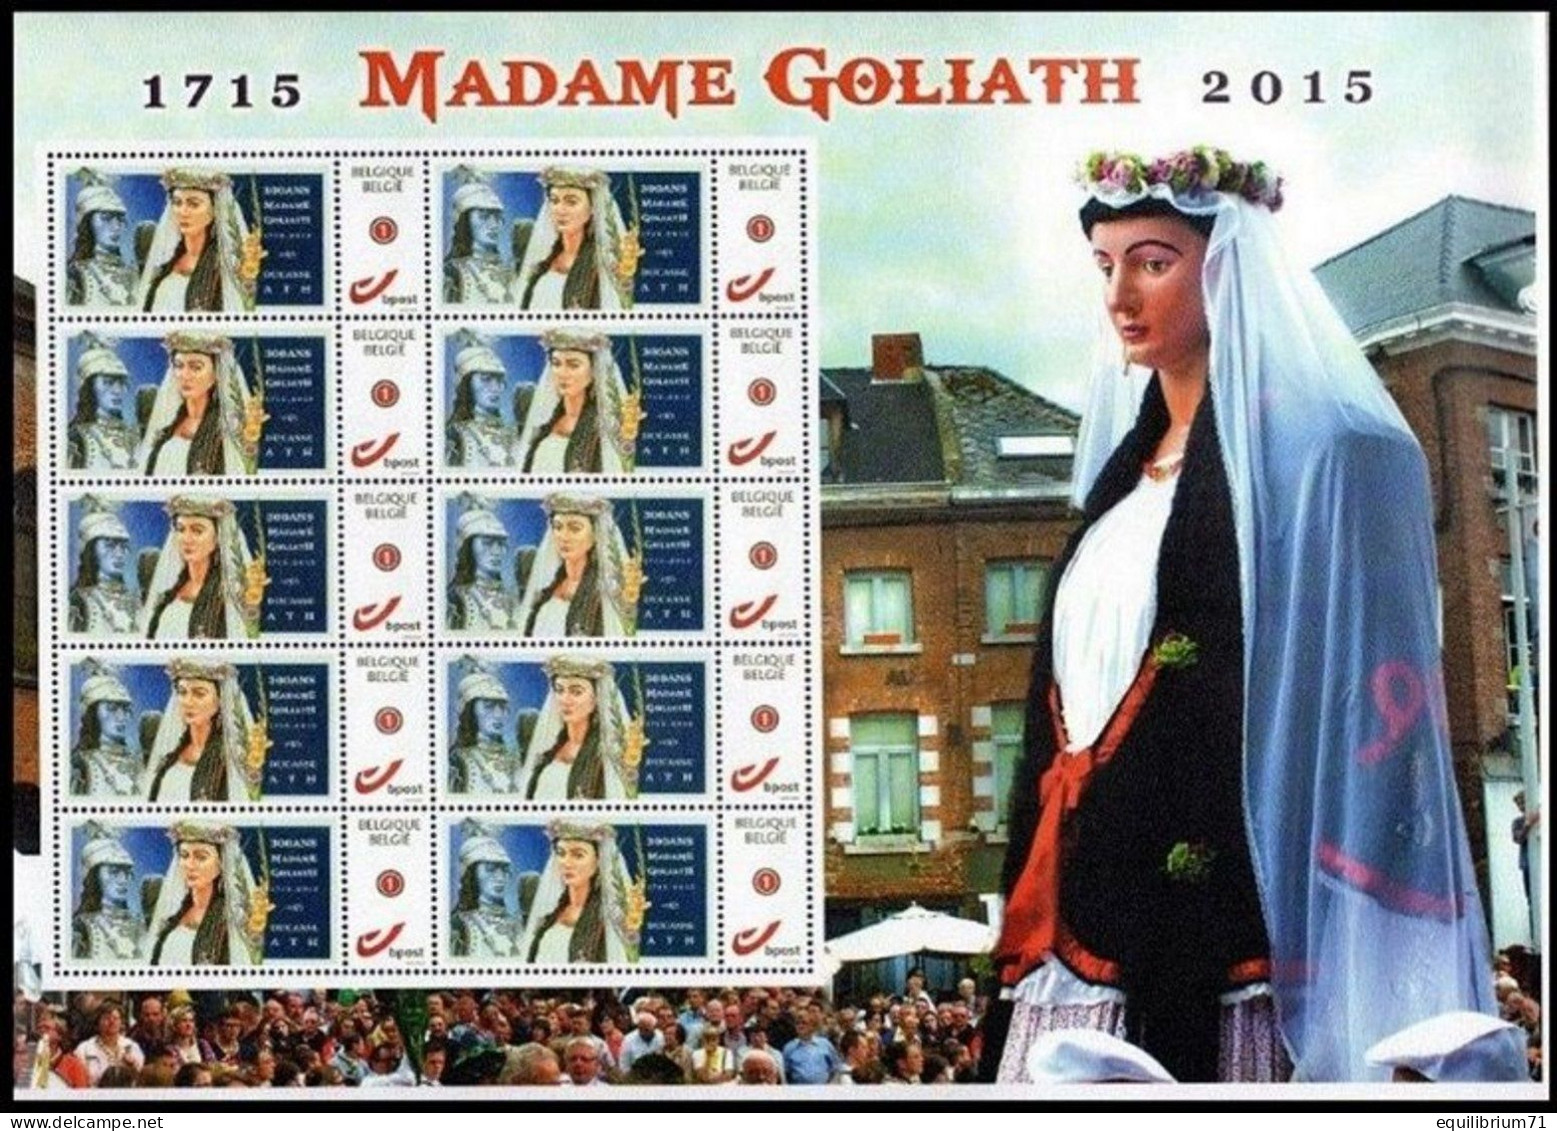 DUOSTAMP** / MYSTAMP** - Ath - 1715/2015 - Madame Goliath - Carnavales